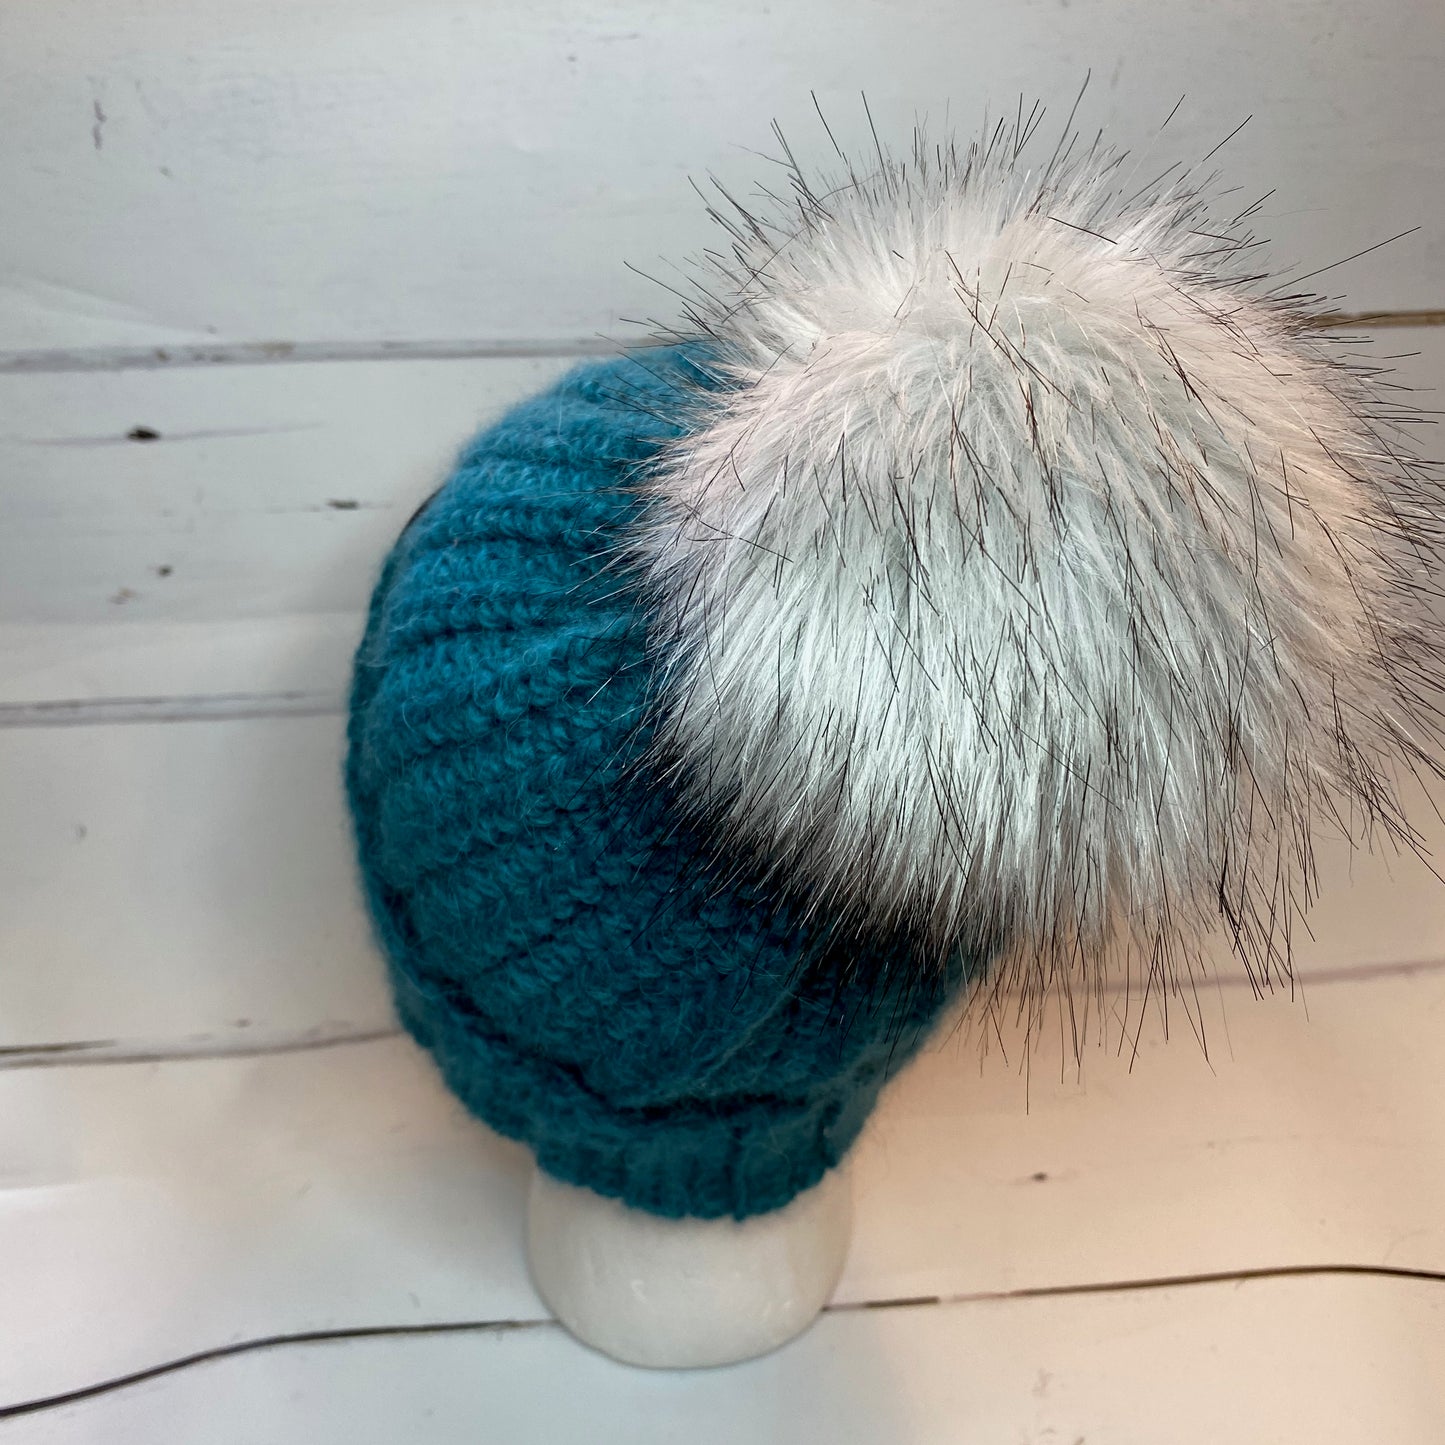 Ribbed Crochet pom pom hat pattern - beginner